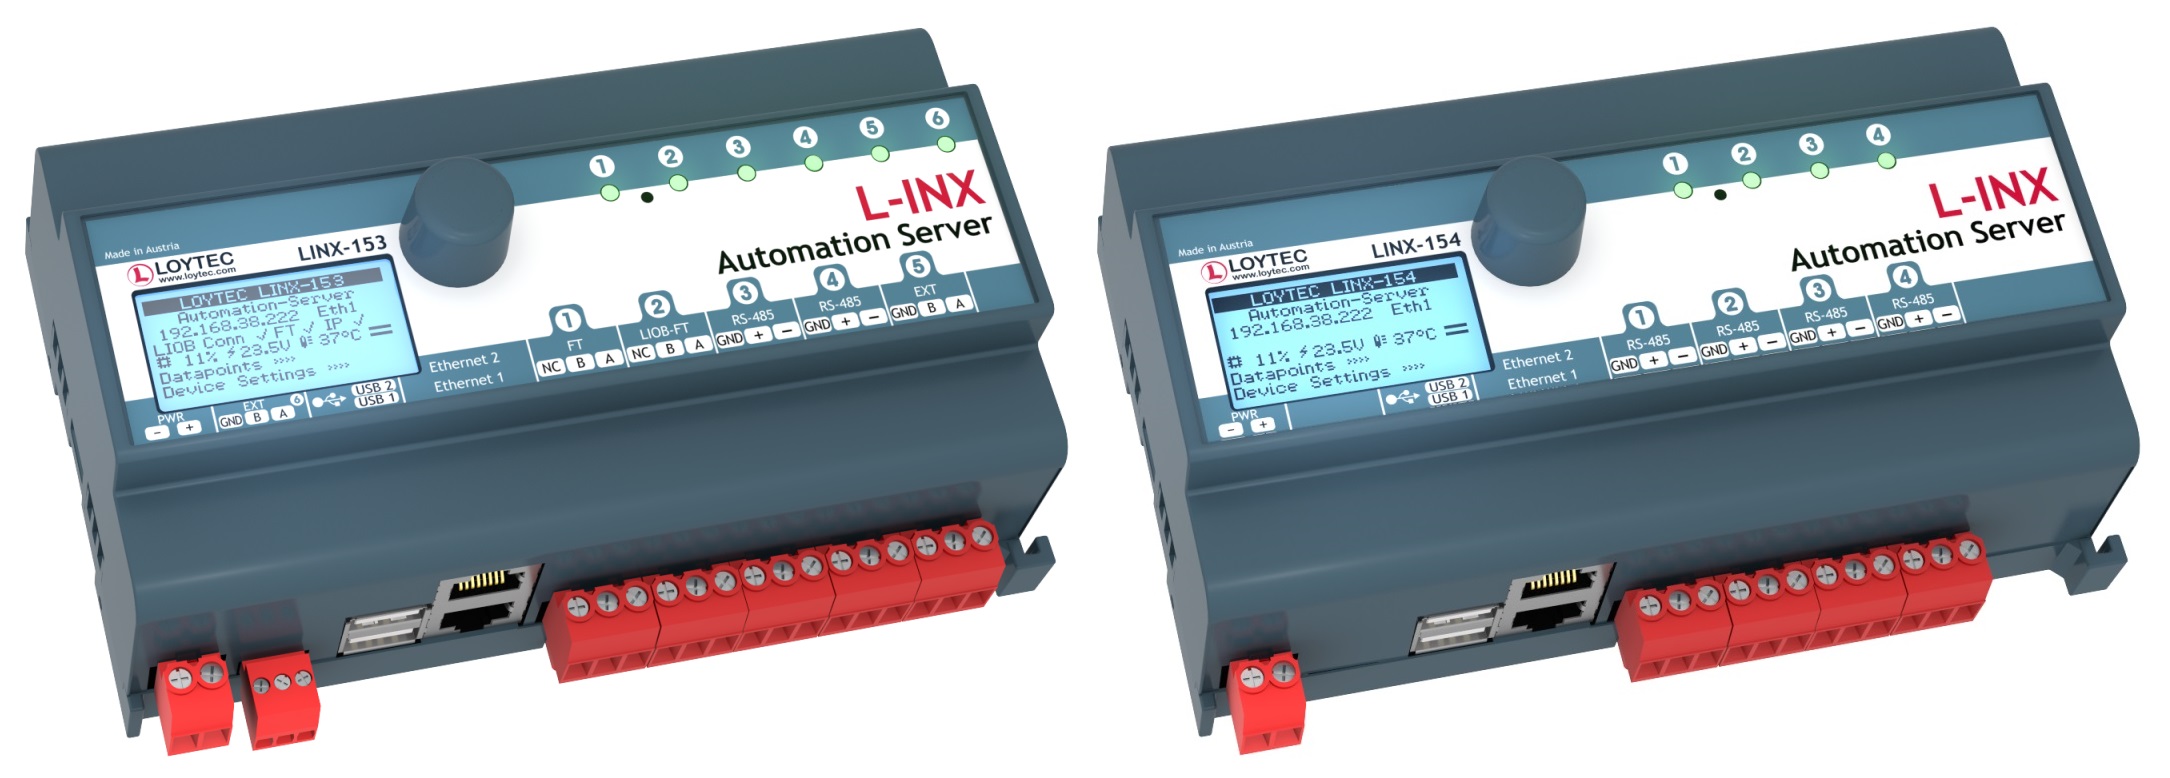 LINX-153/154 Automation Server